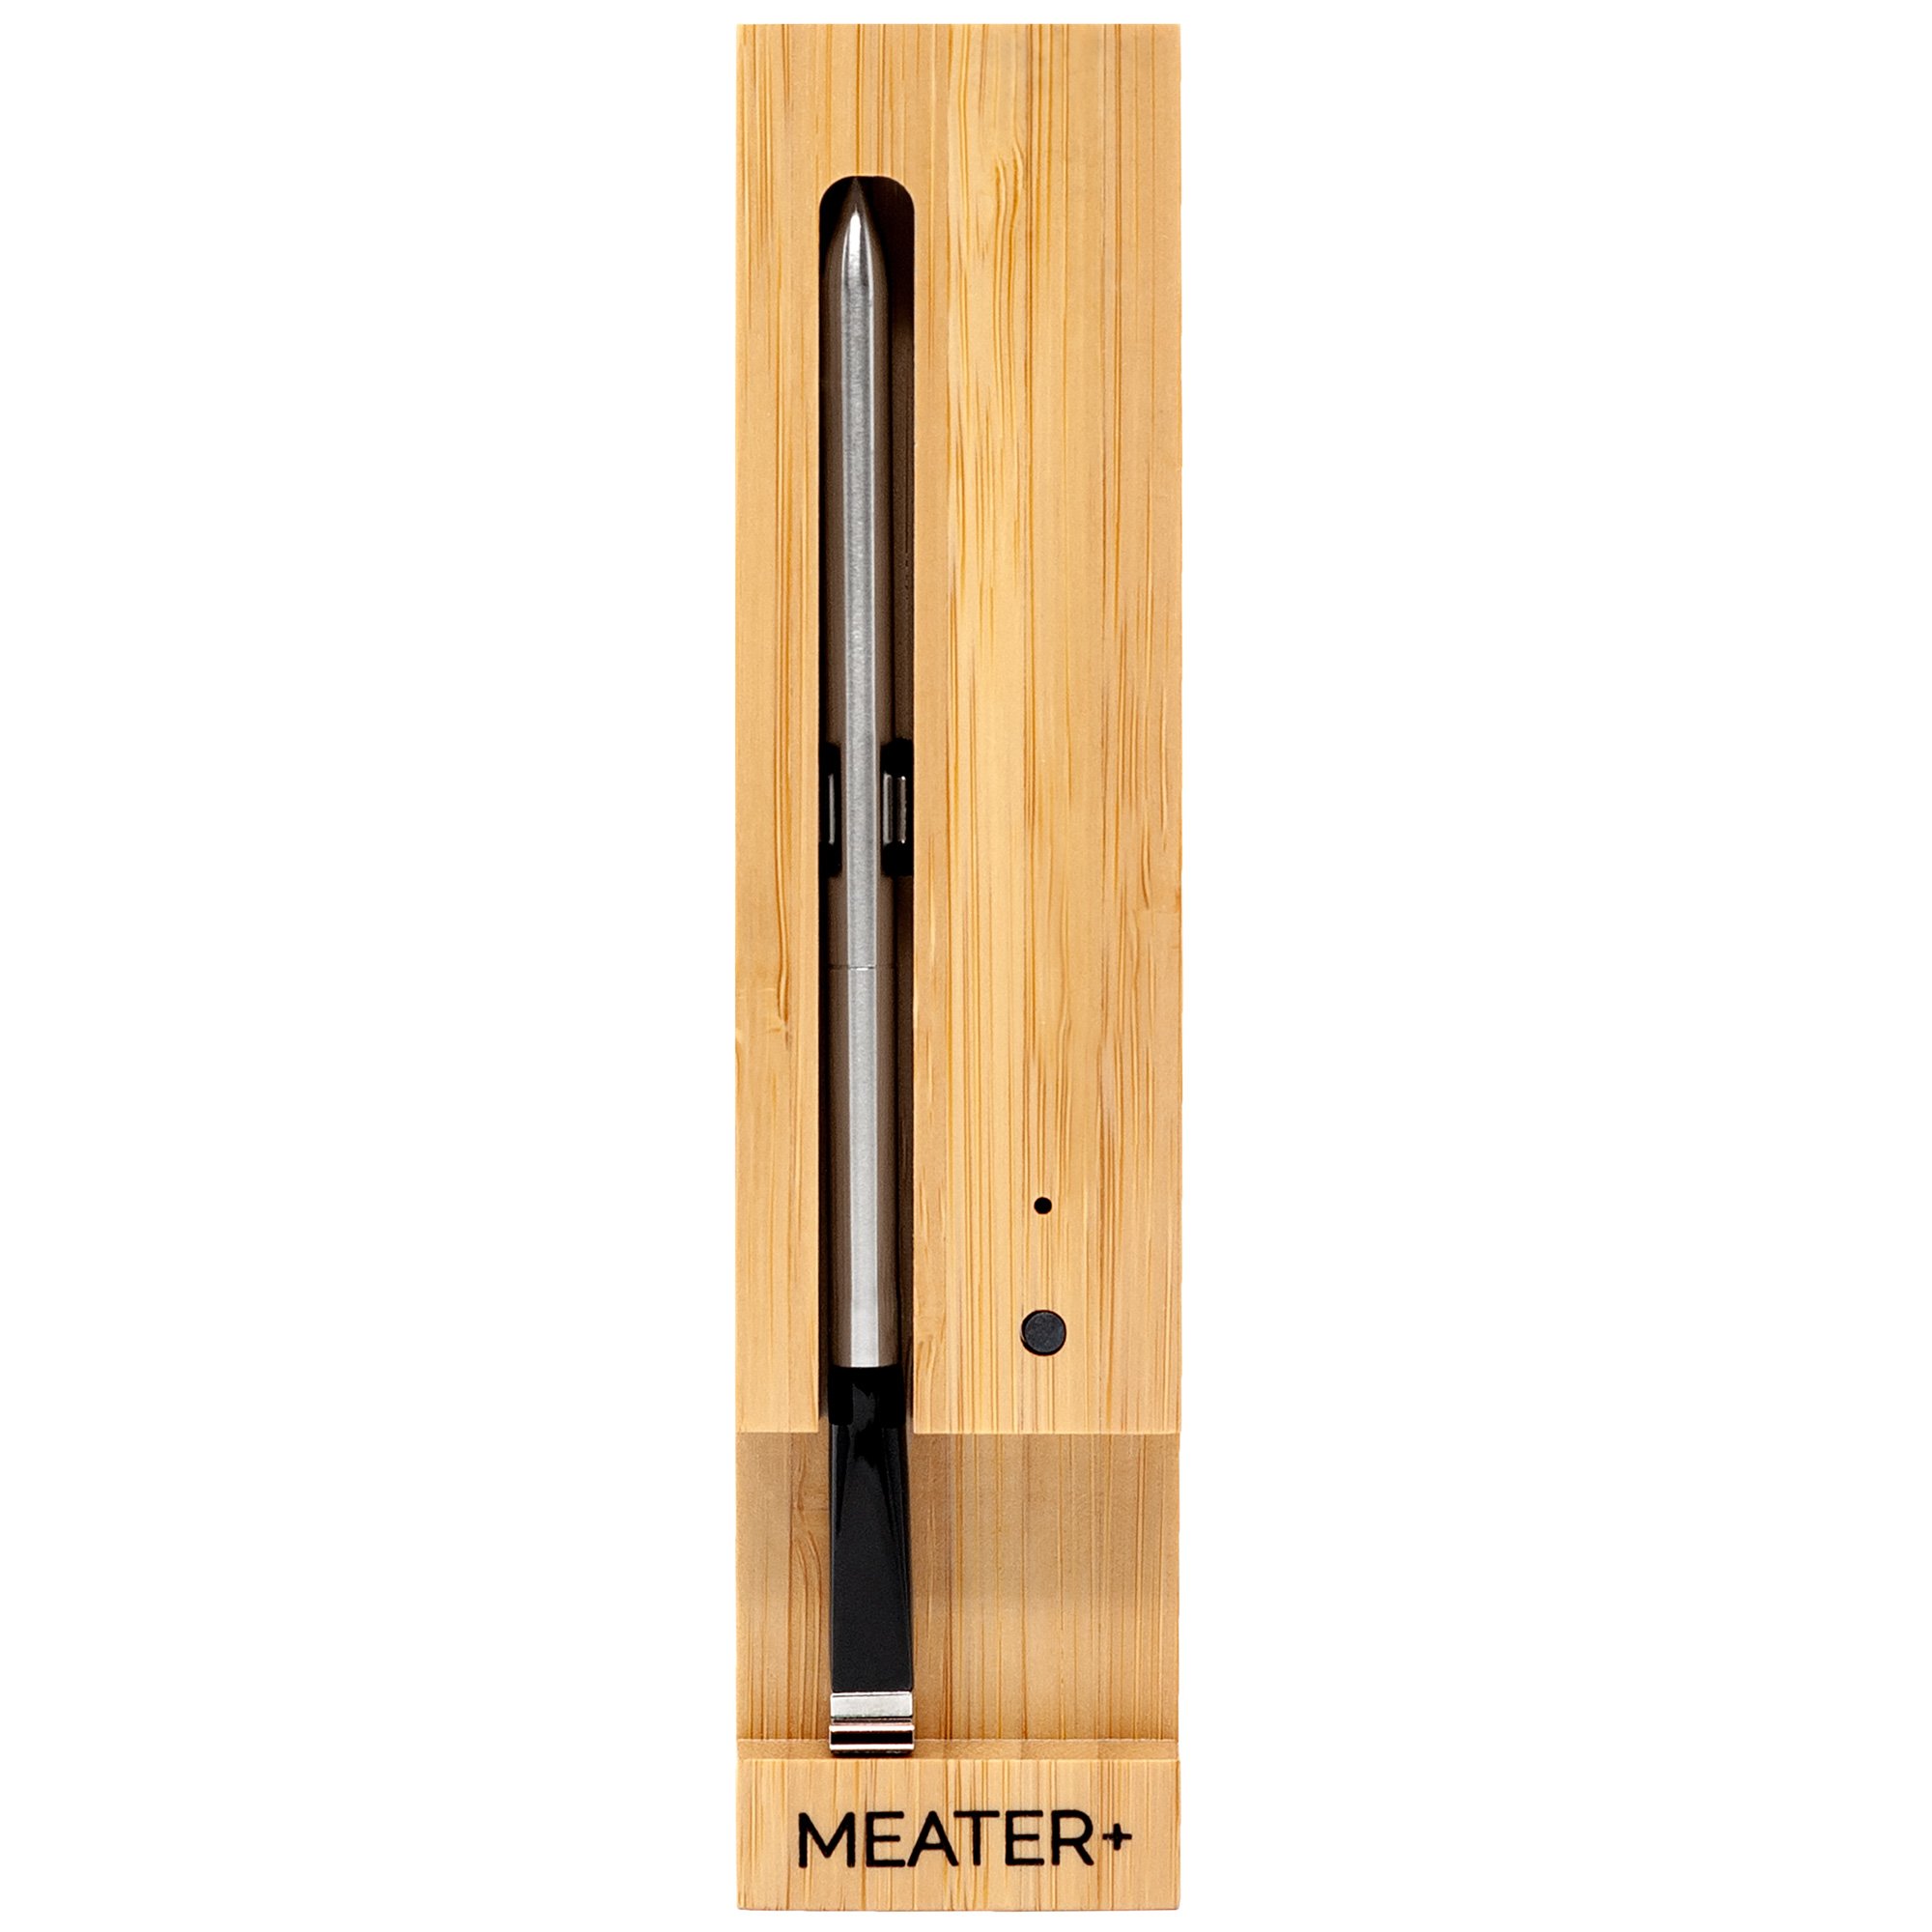 Meater Plus steketermometer